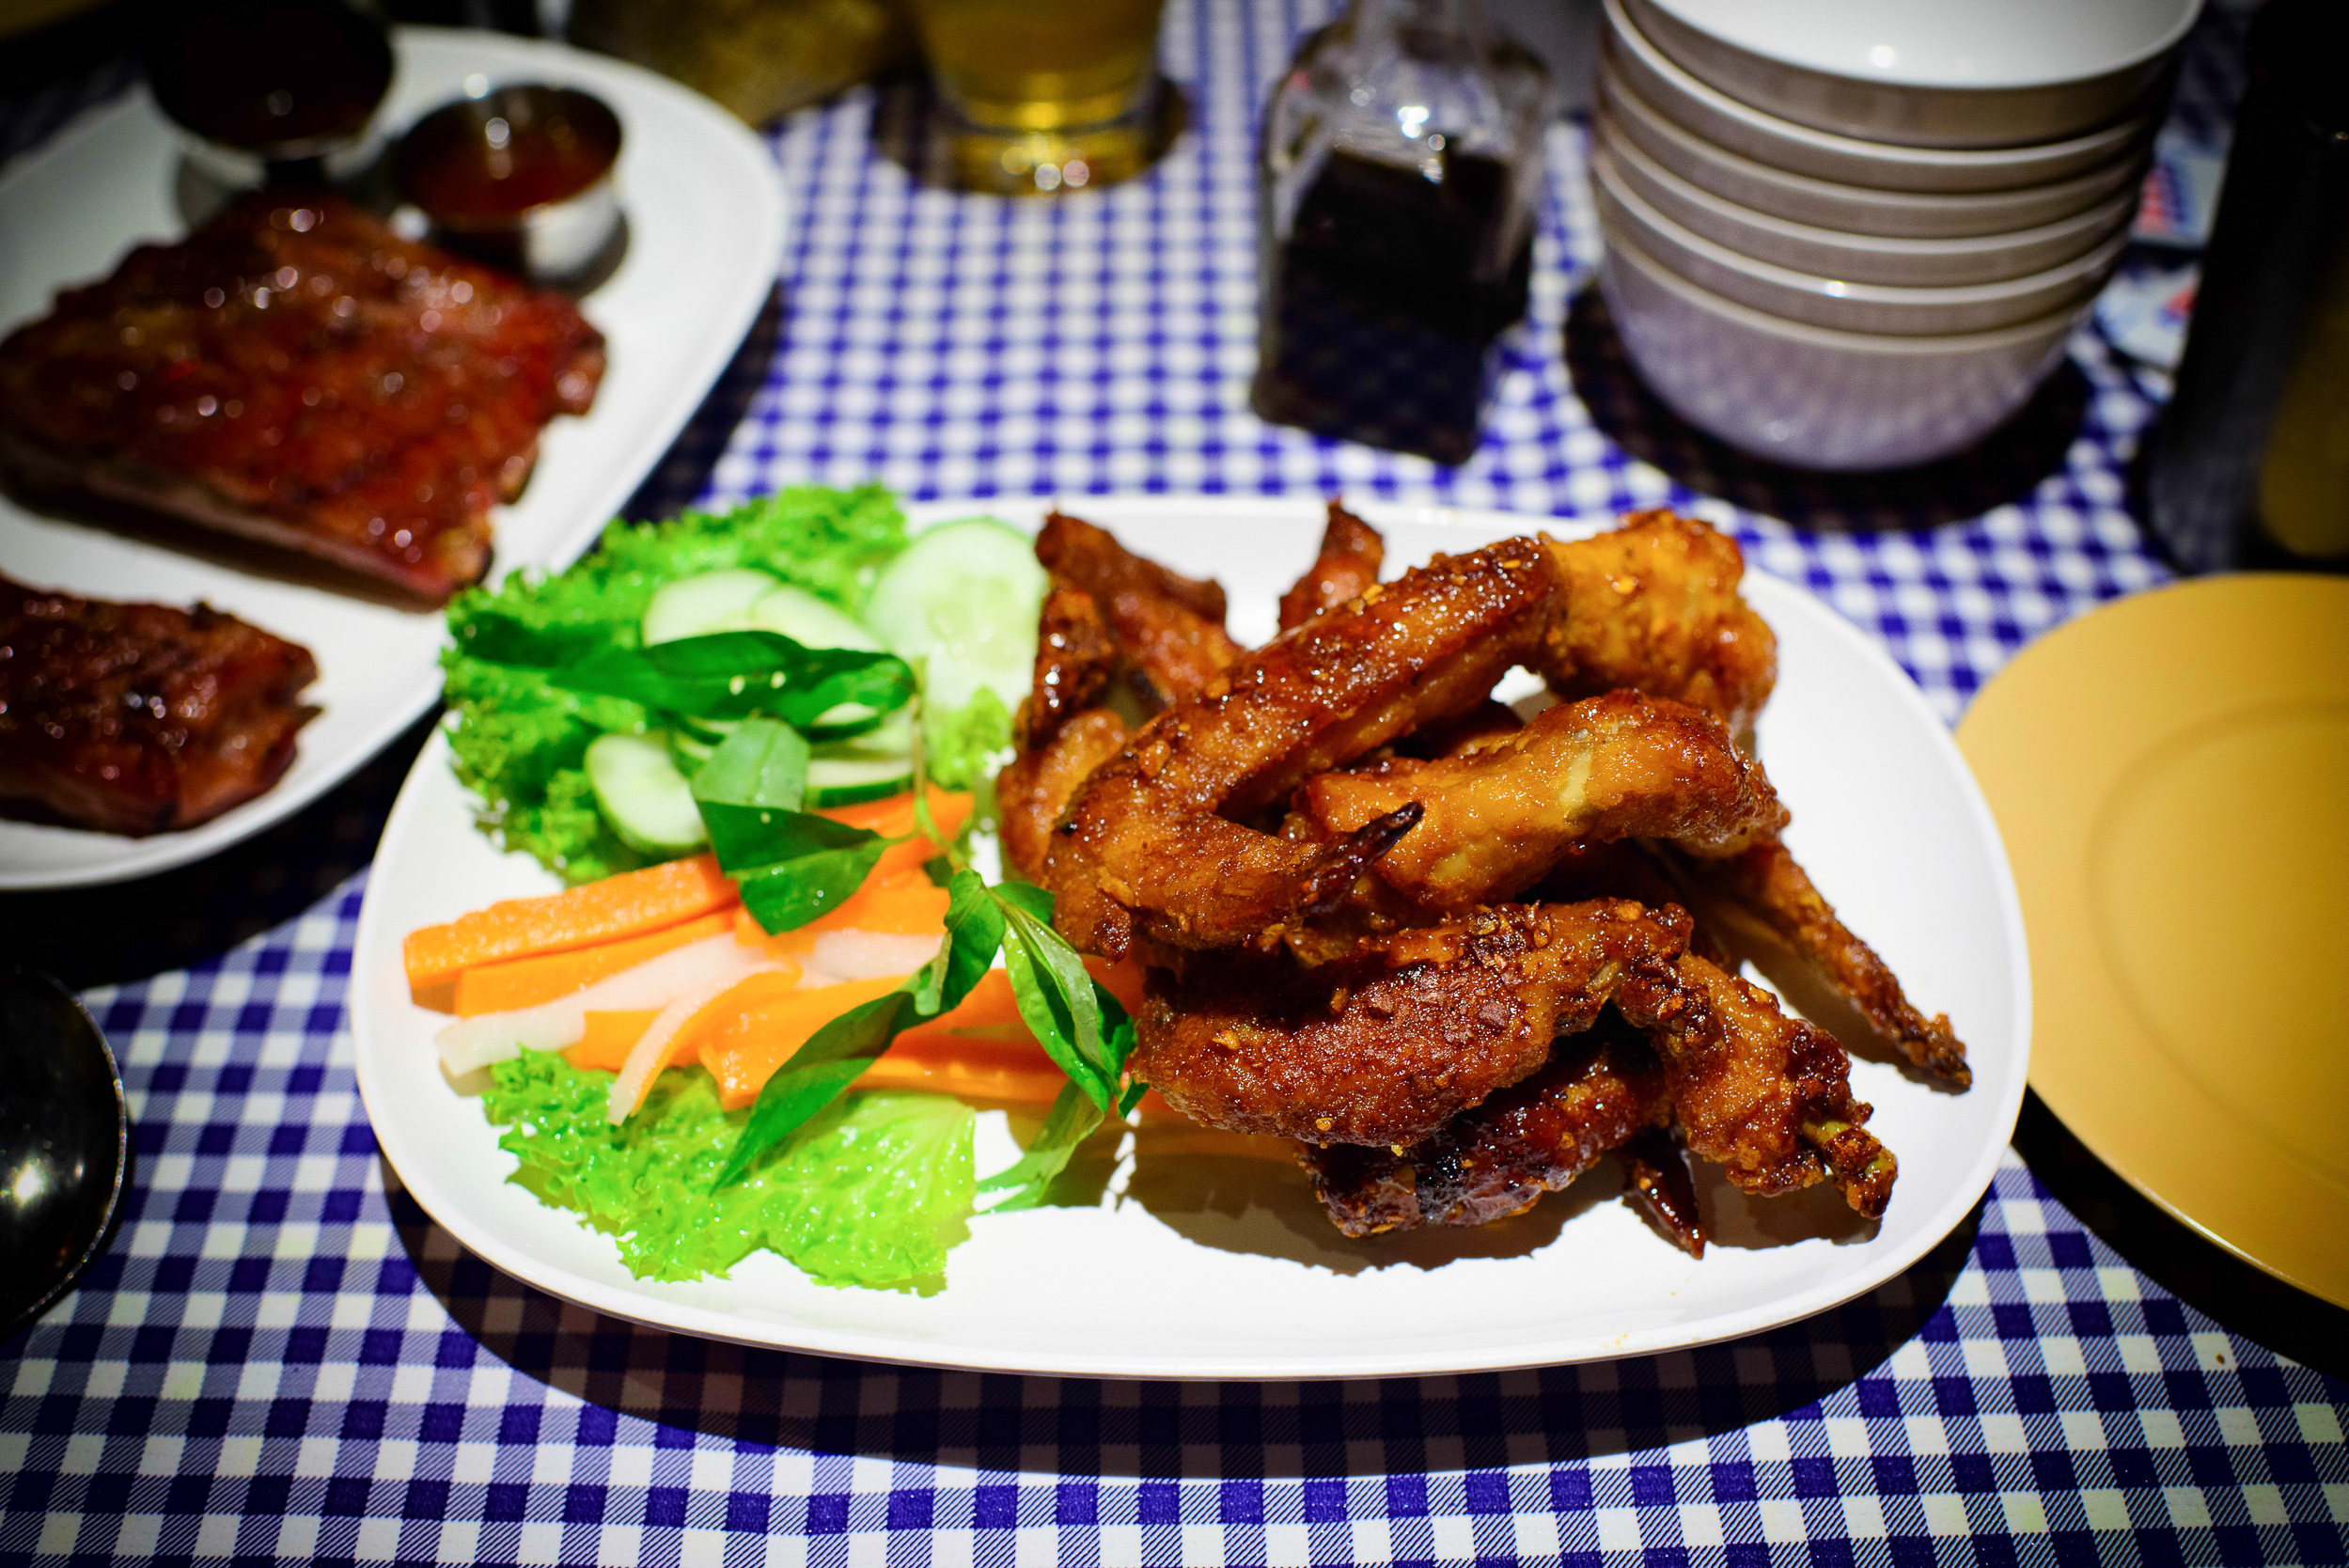 Ike's Vietnamese fish sauce wings - Fresh Amish natural chicken